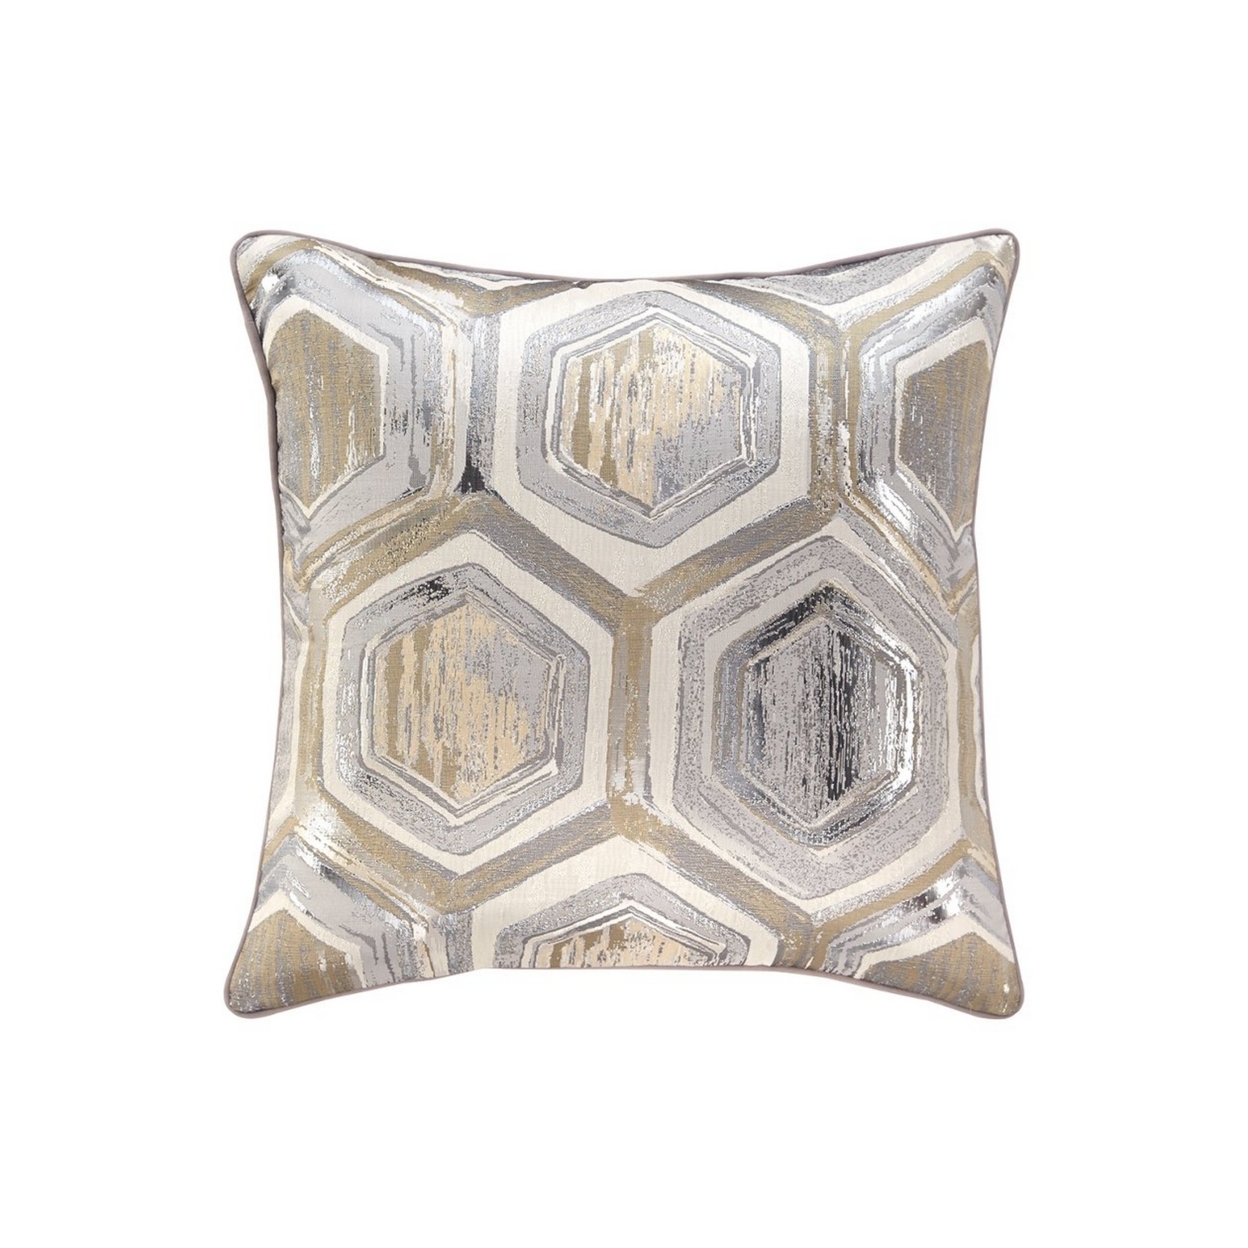 Fabric Pillow With Hexagonal Print And Zipper Closure, Set Of 4, Silver- Saltoro Sherpi